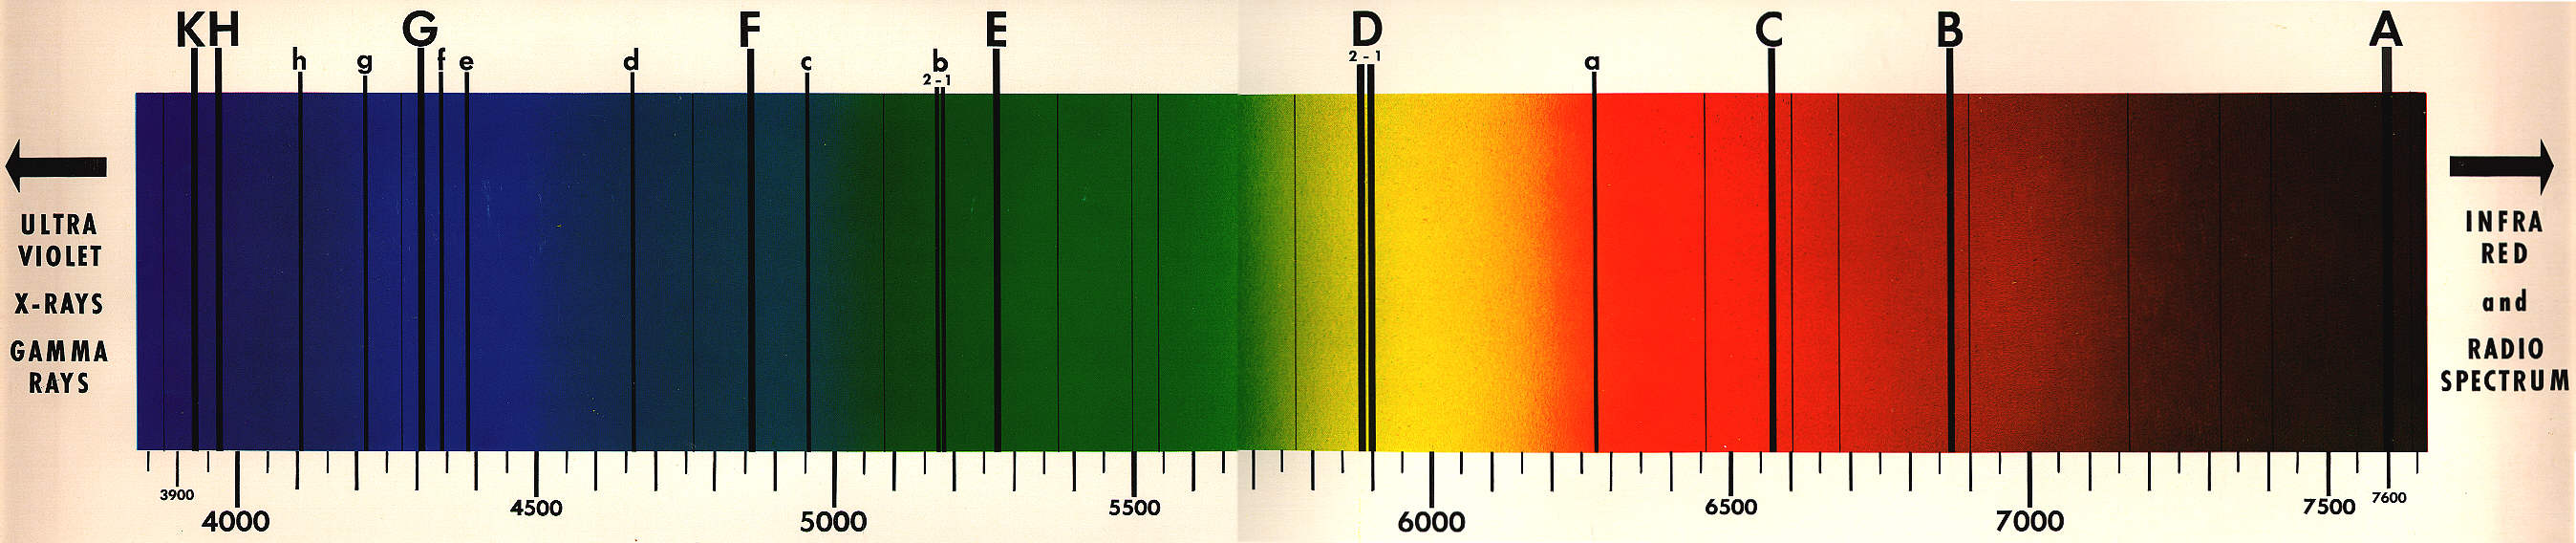 High-Resolution Image of Solar Spectrum